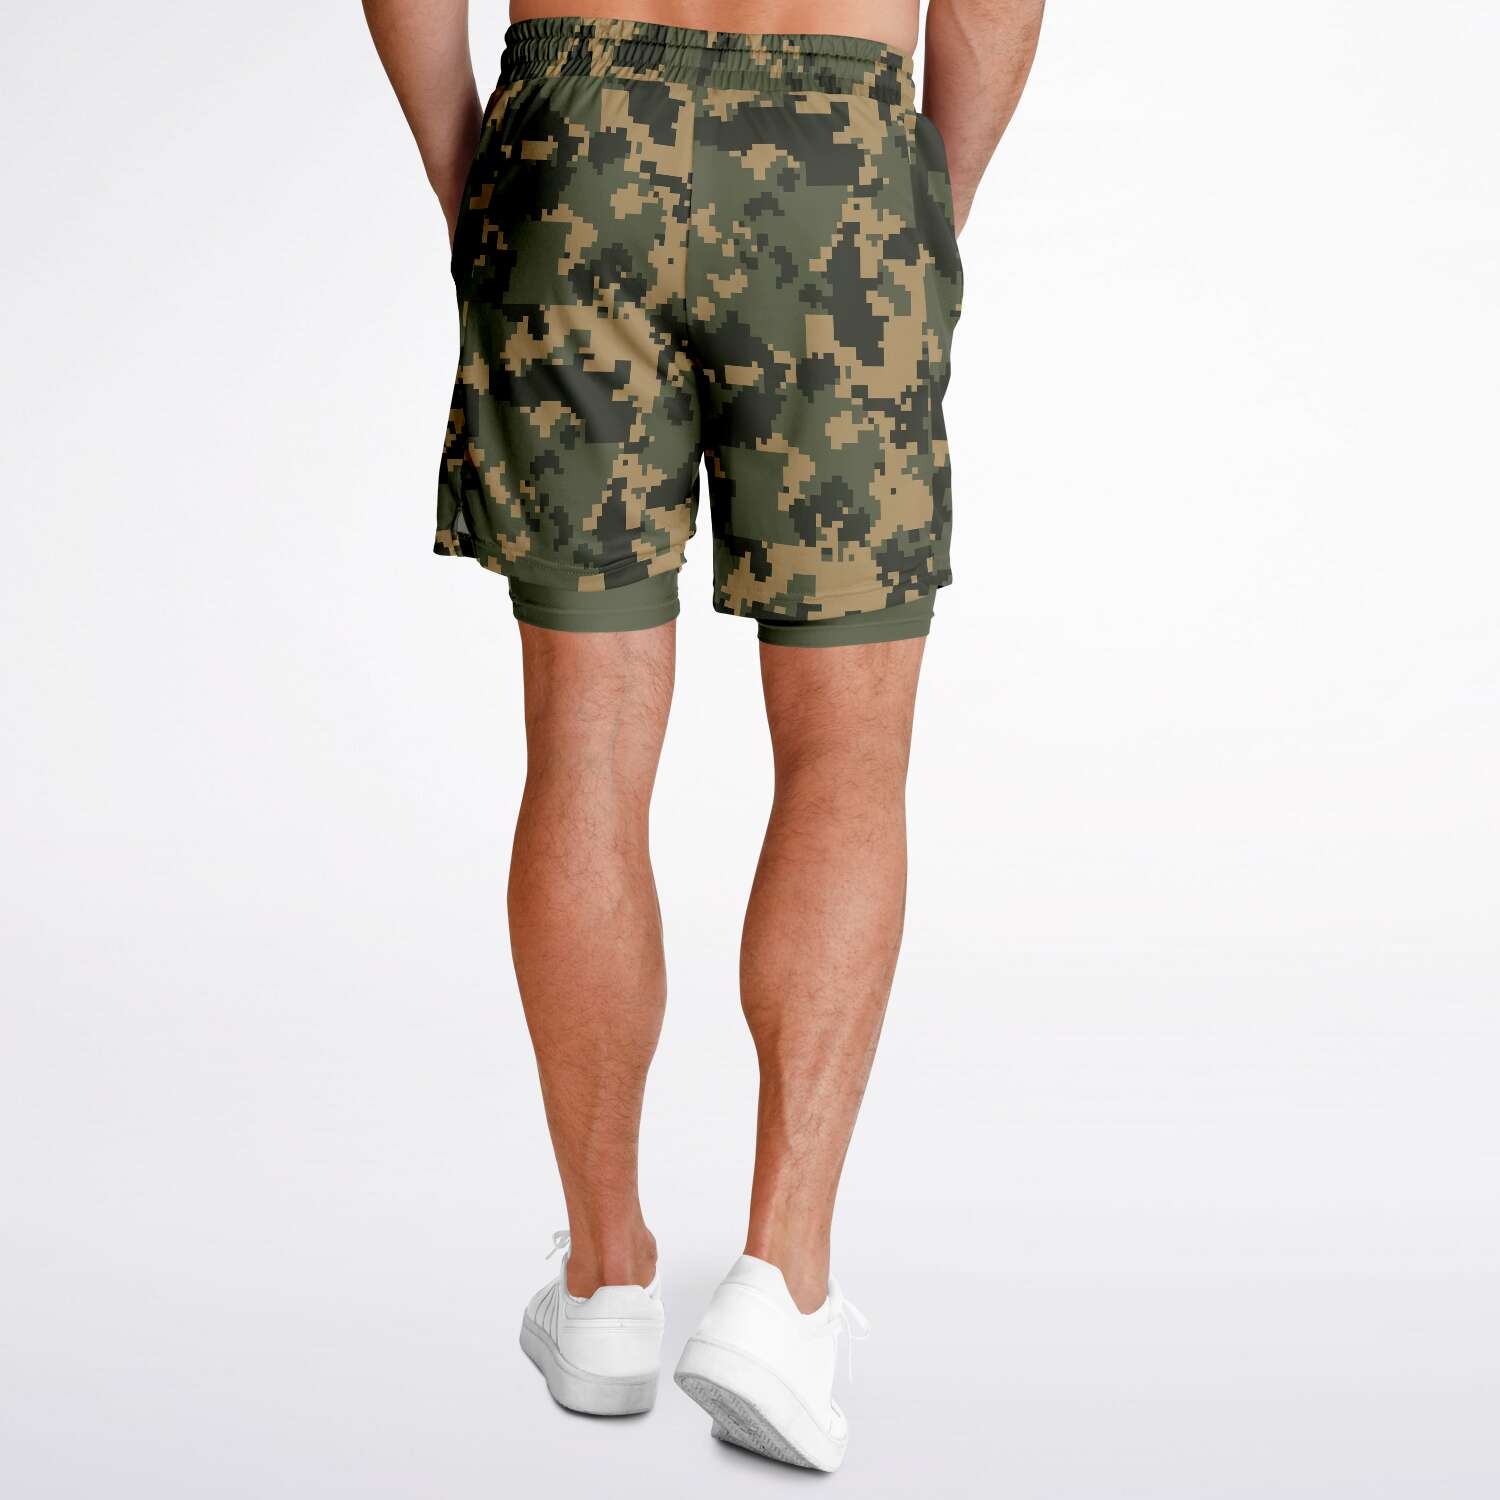 Marine MARPAT Camo Shorts